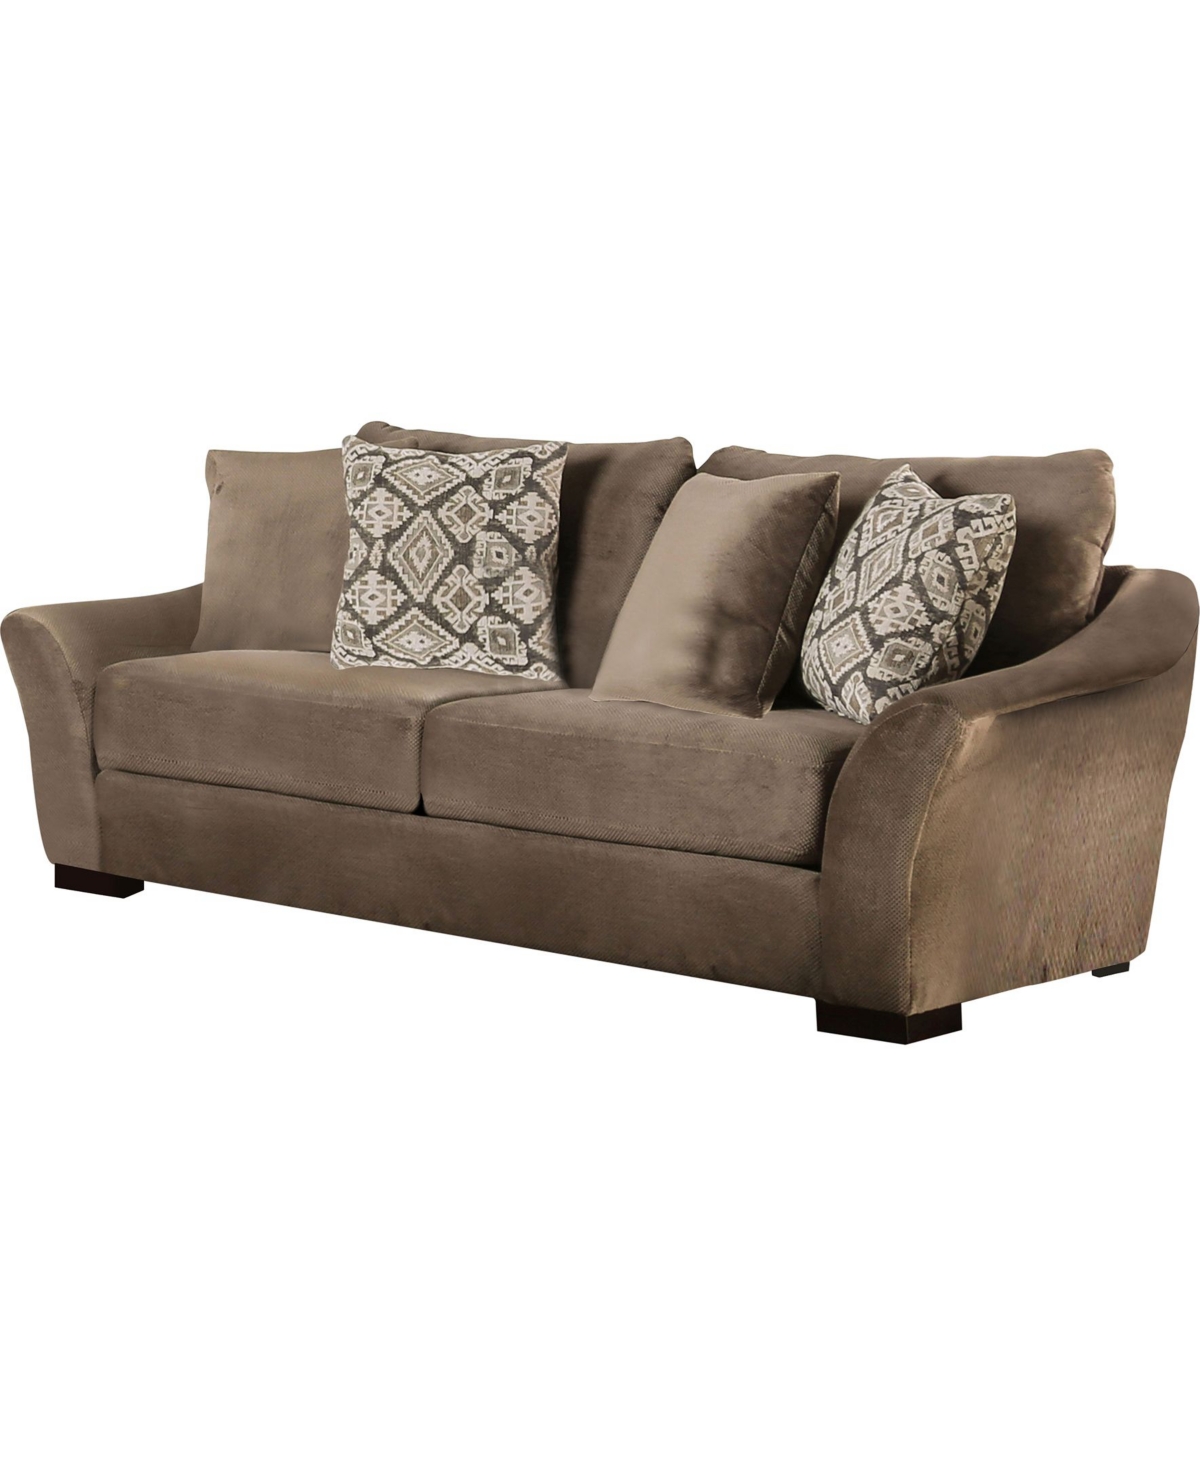 of America Mallena Upholstered Sofa